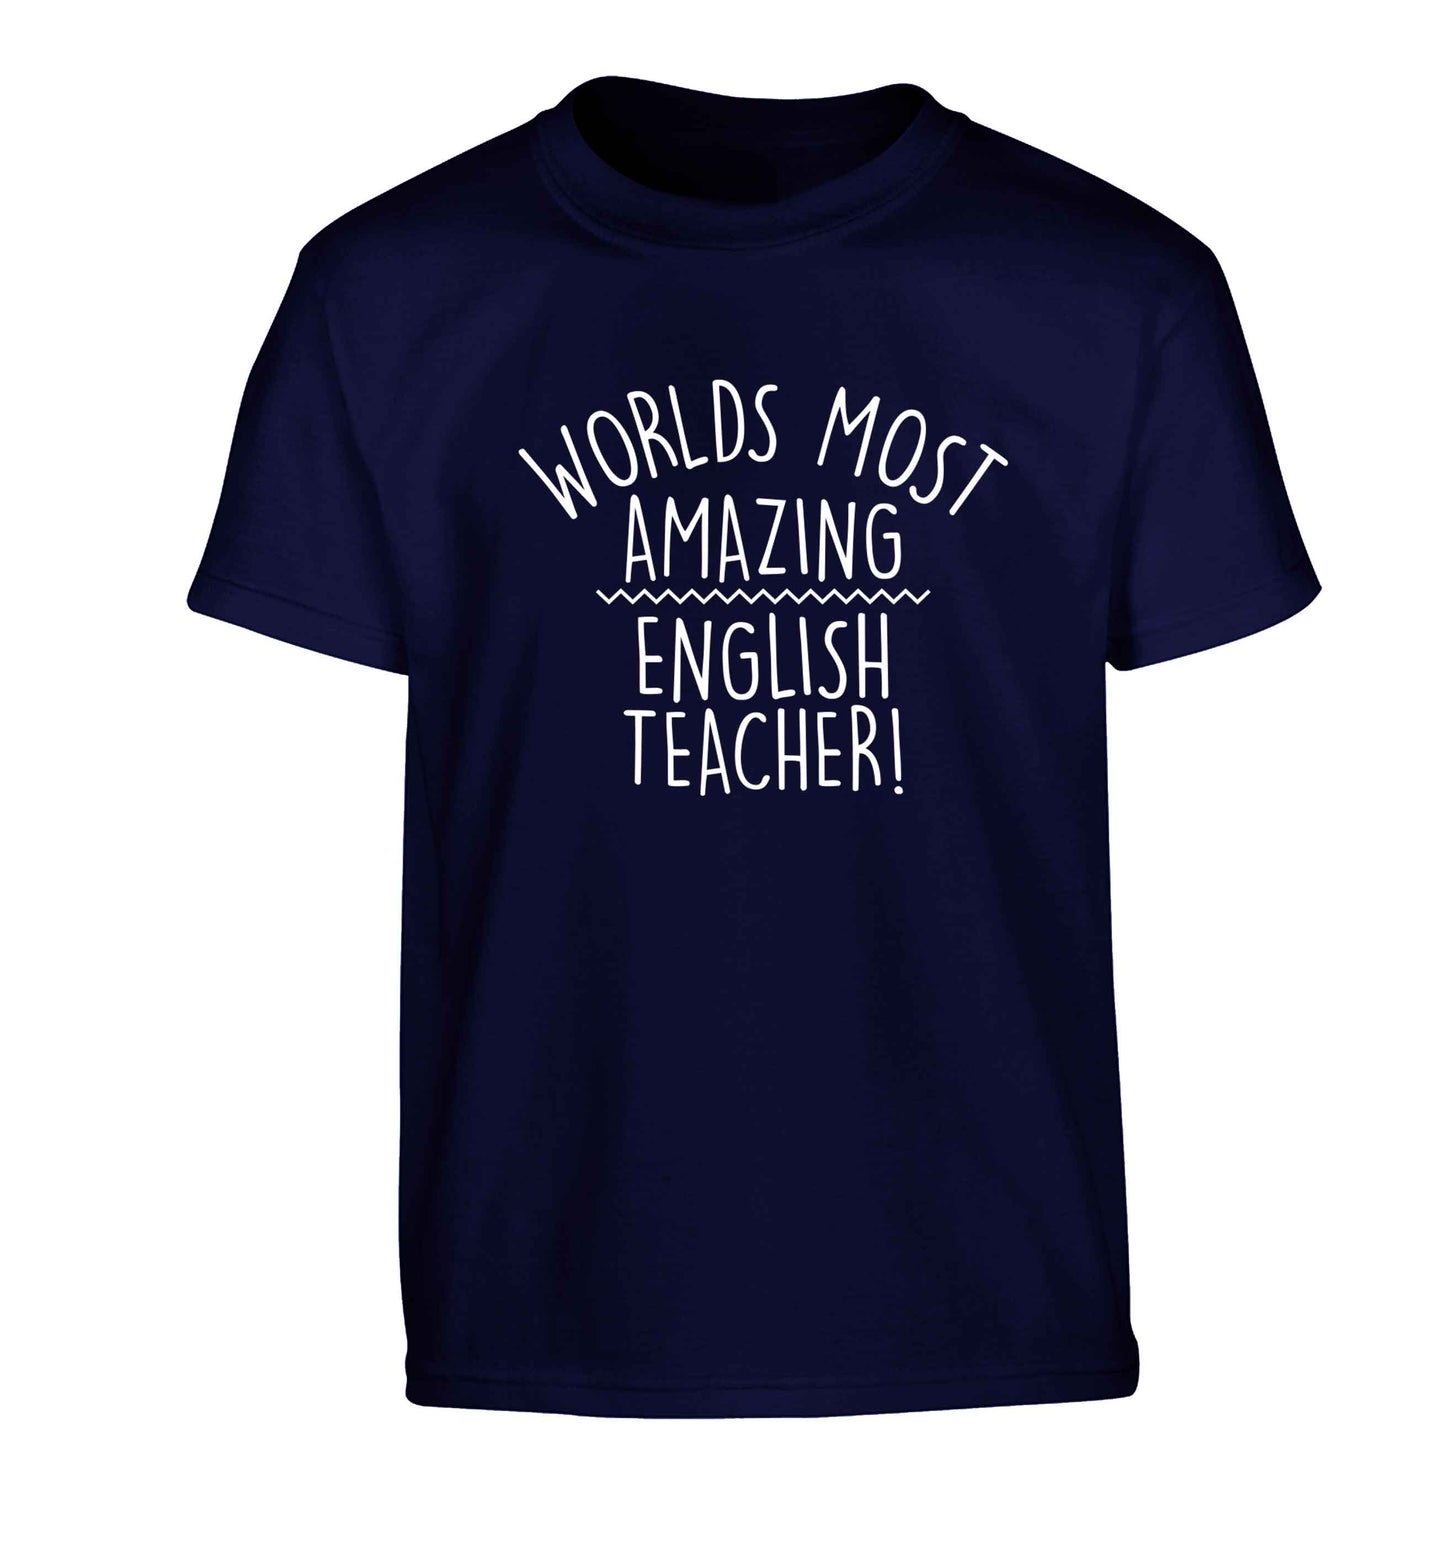 Worlds most amazing English teacher Children's navy Tshirt 12-13 Years